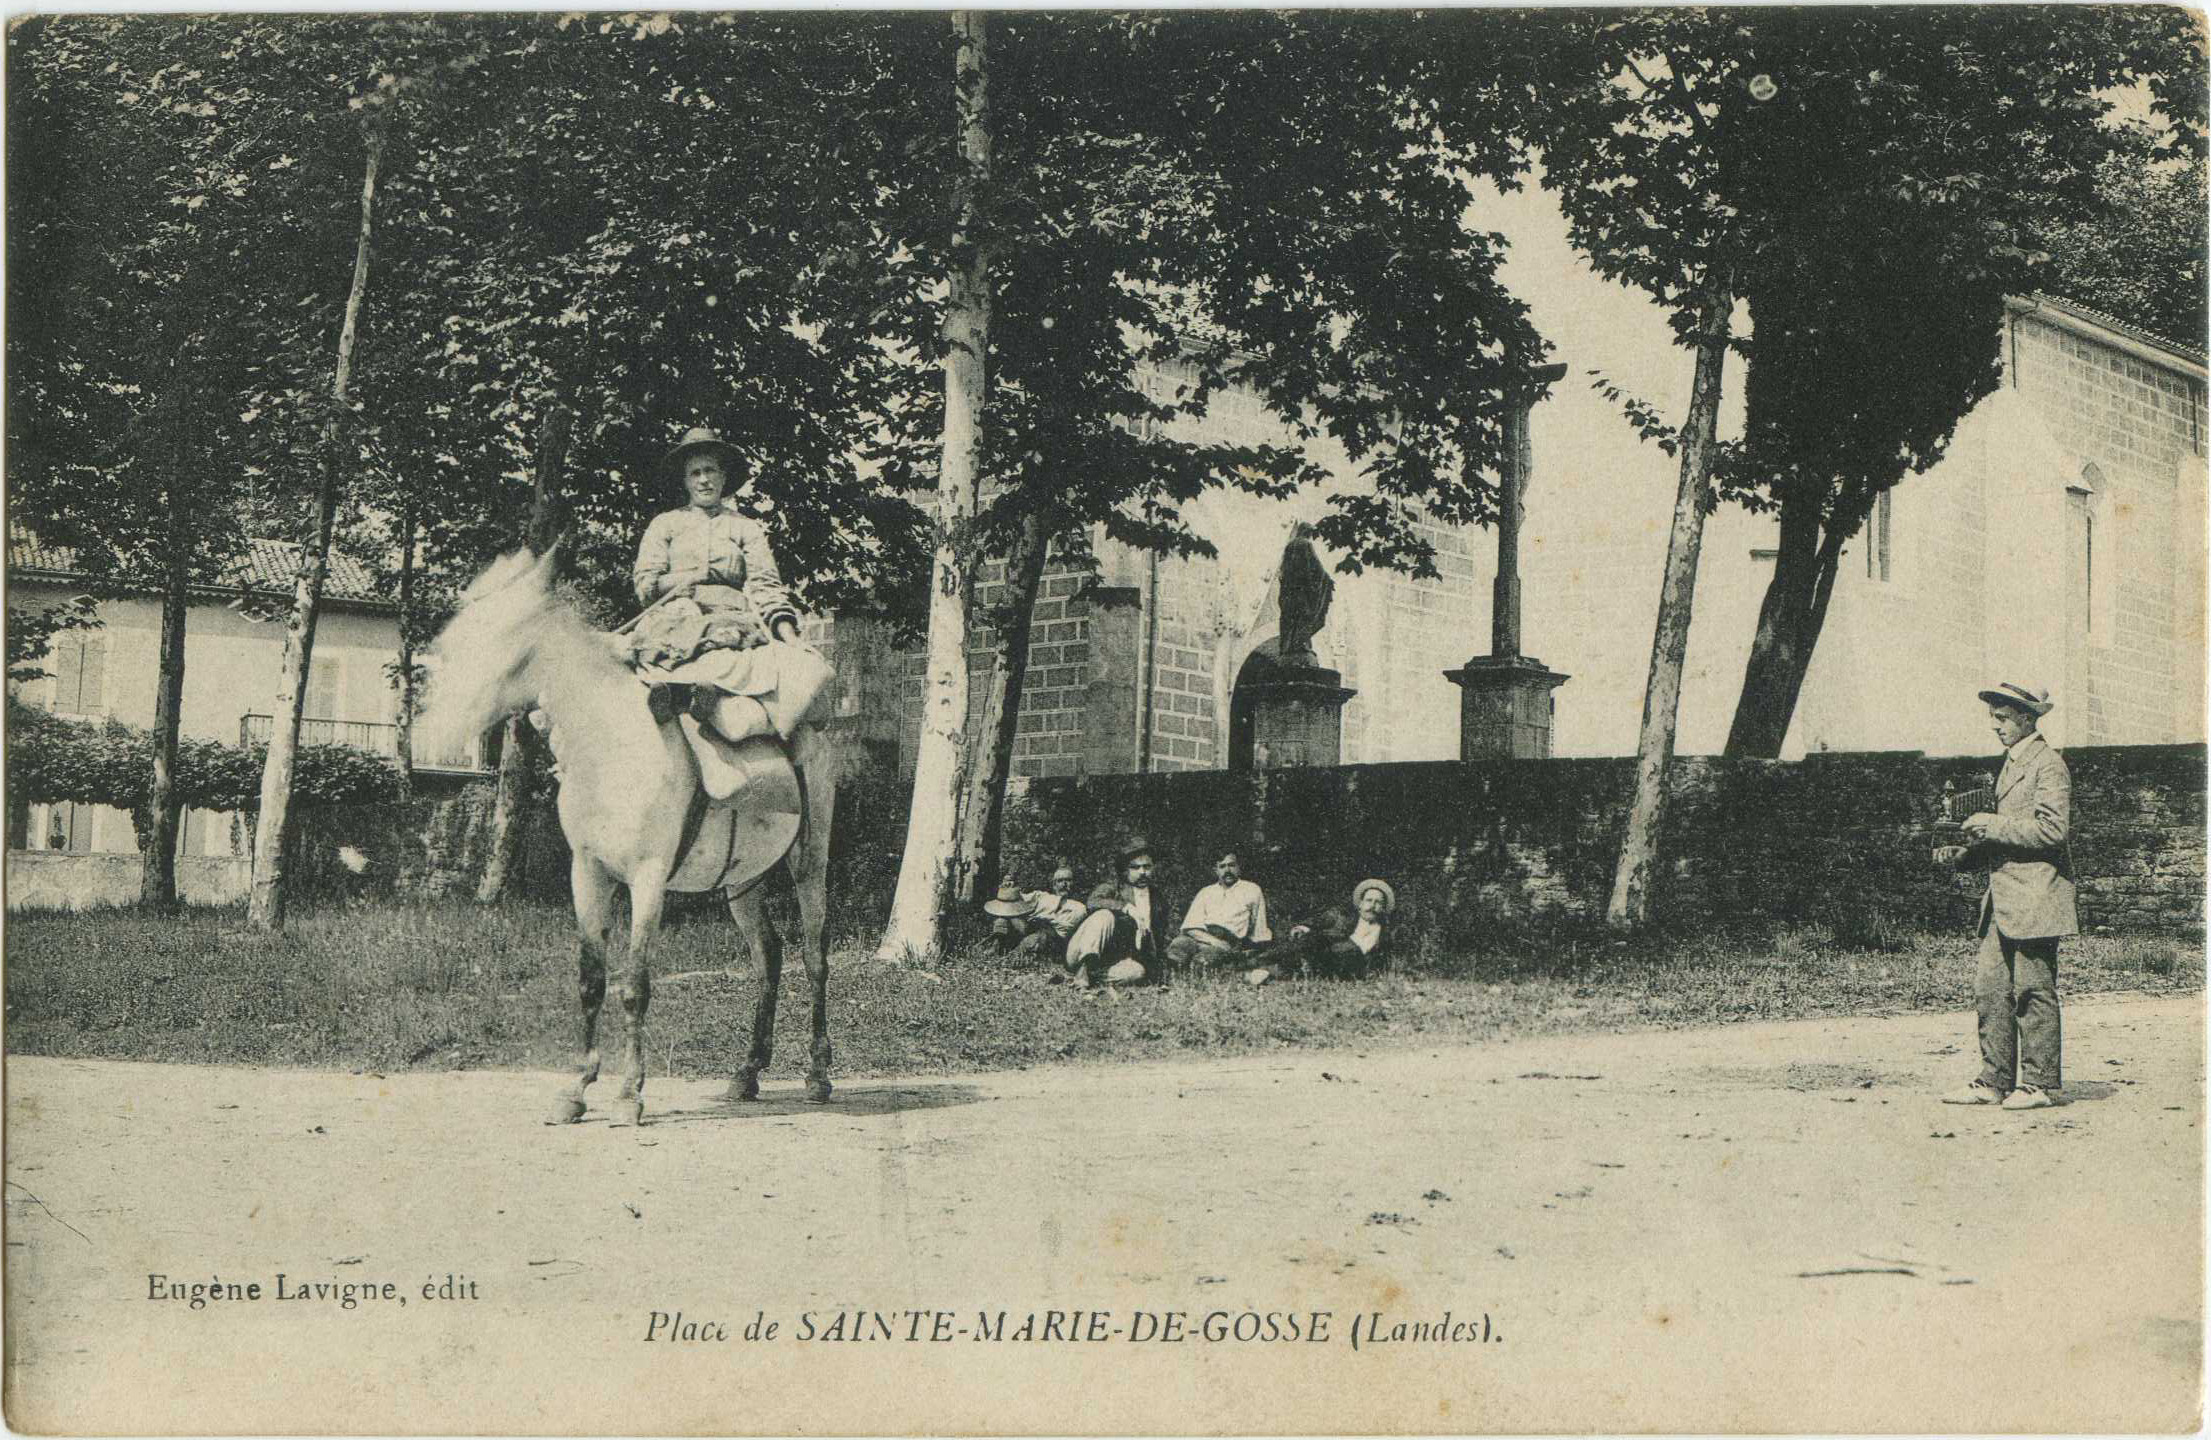 Sainte-Marie-de-Gosse - Place de SAINTE-MARIE-DE-GOSSE